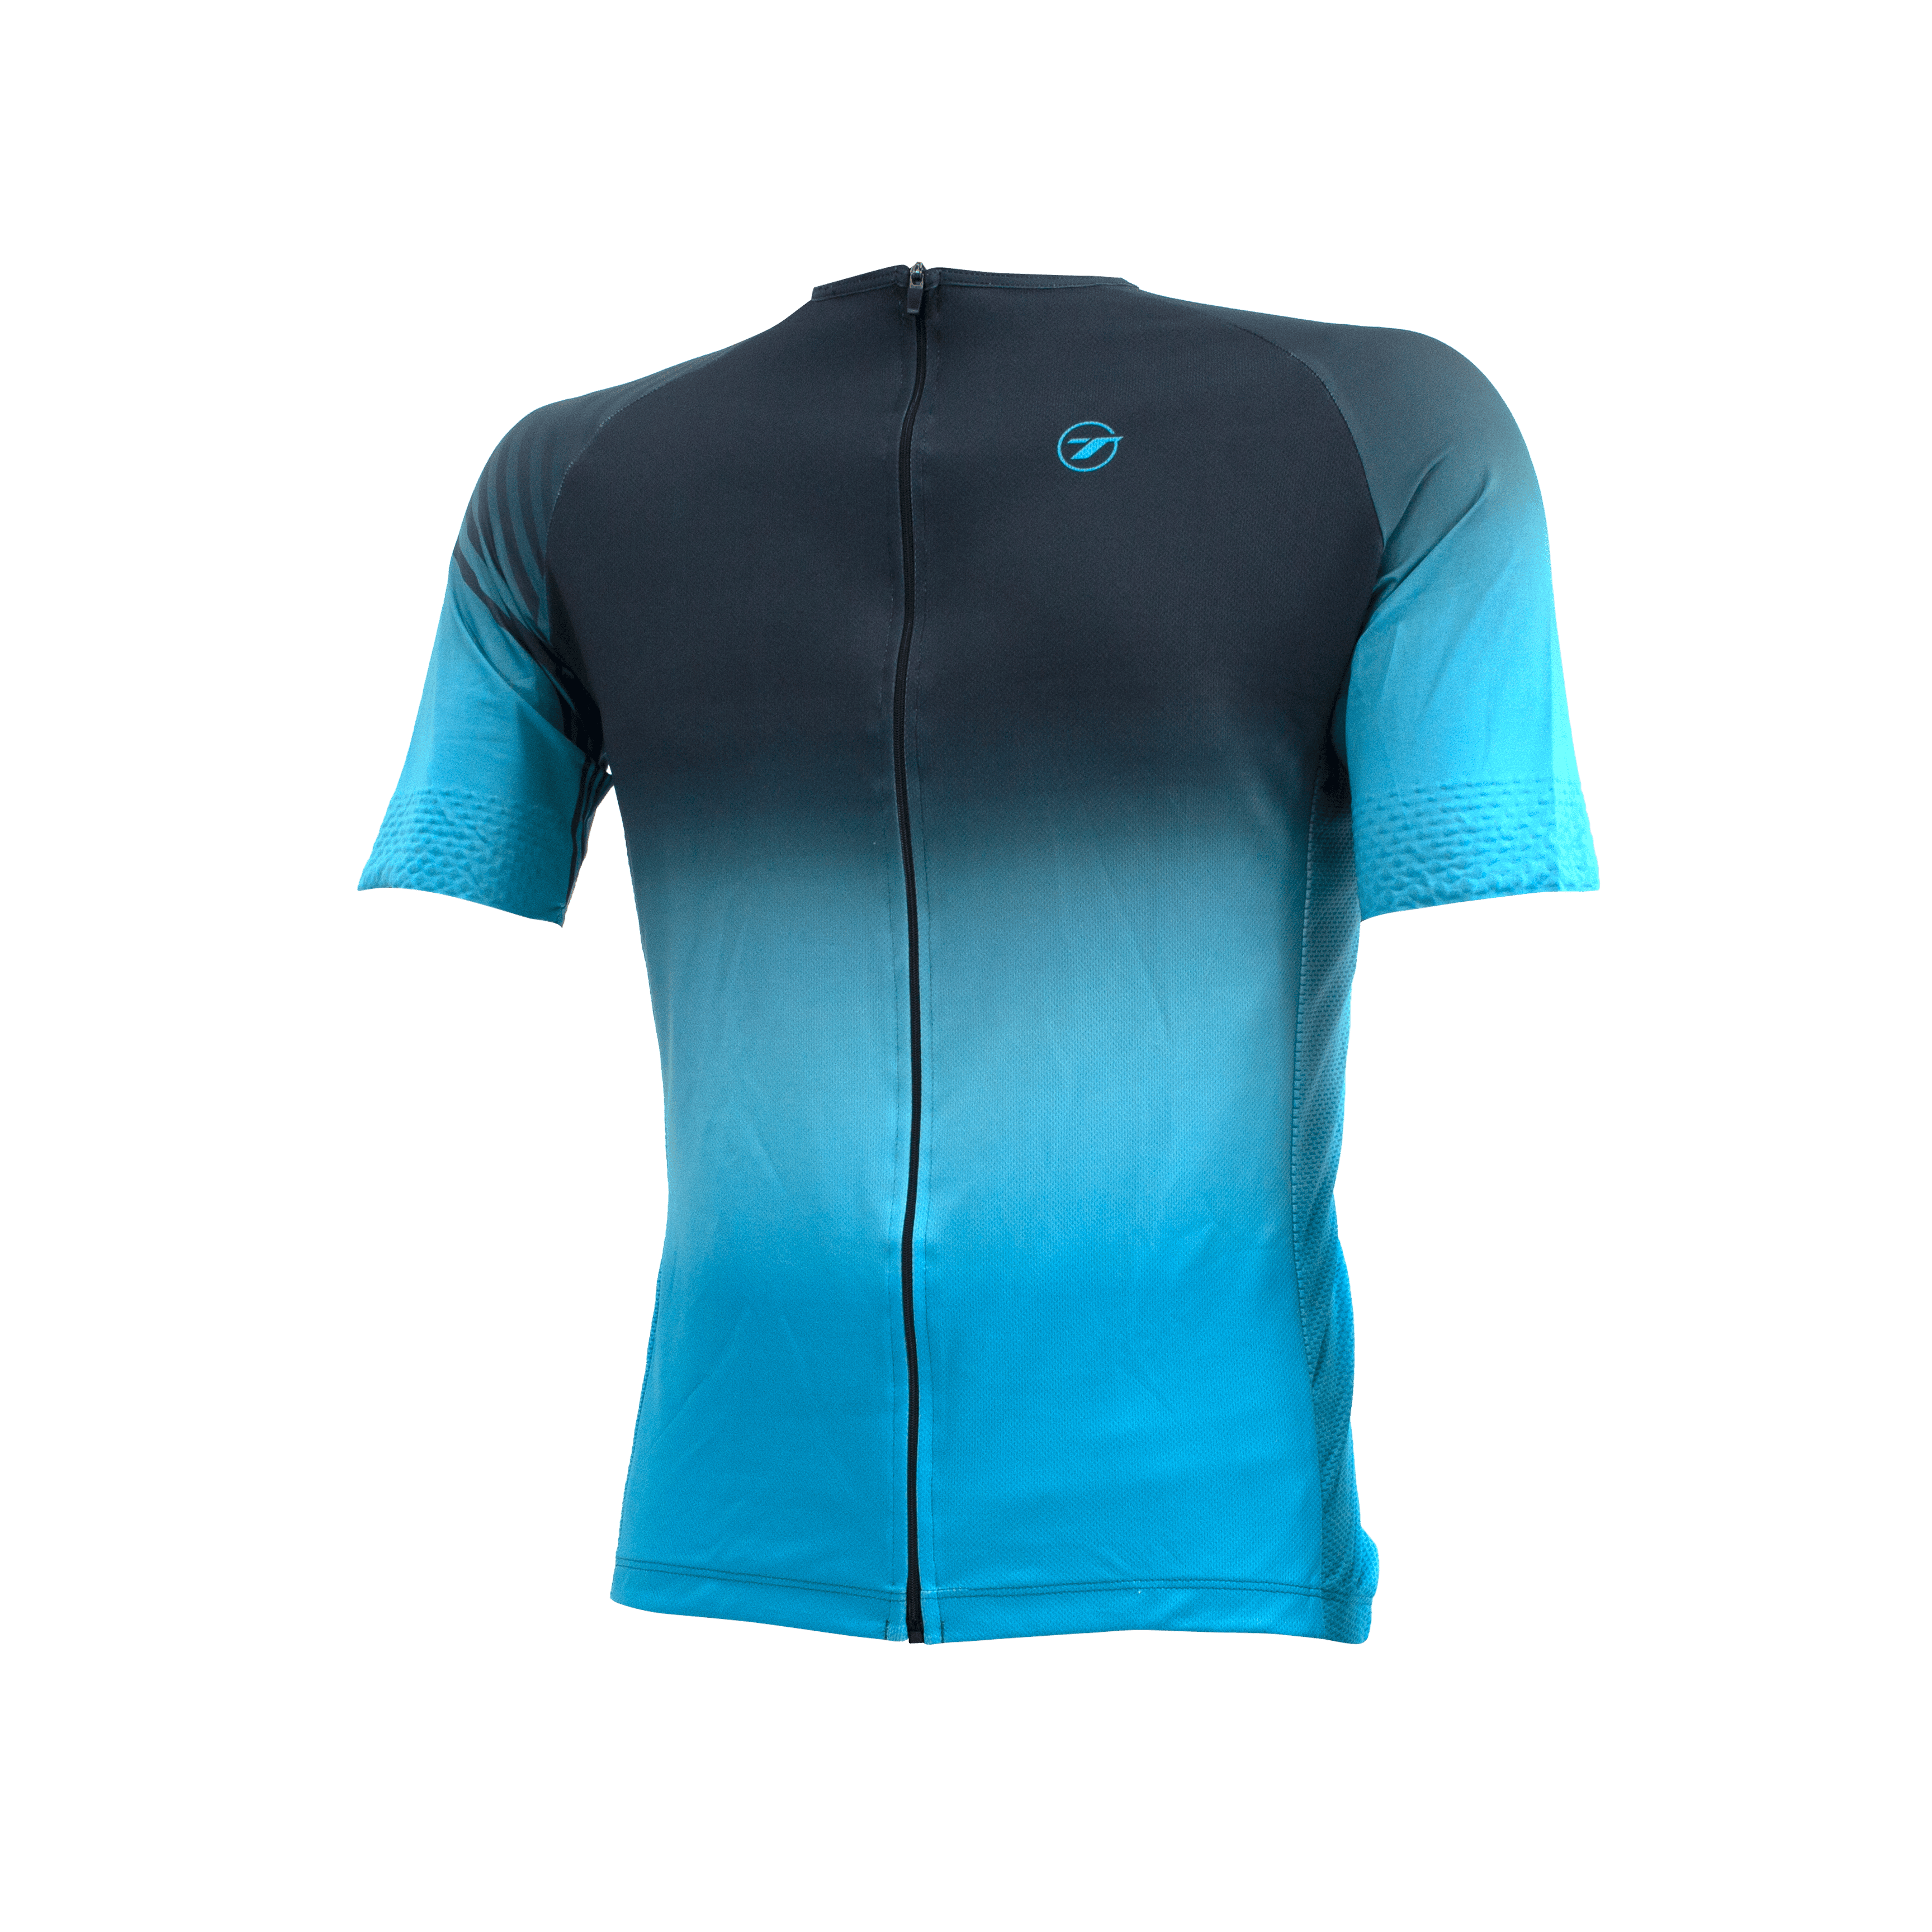 Camisa TSW | RIDE LINE - Azul/Preto